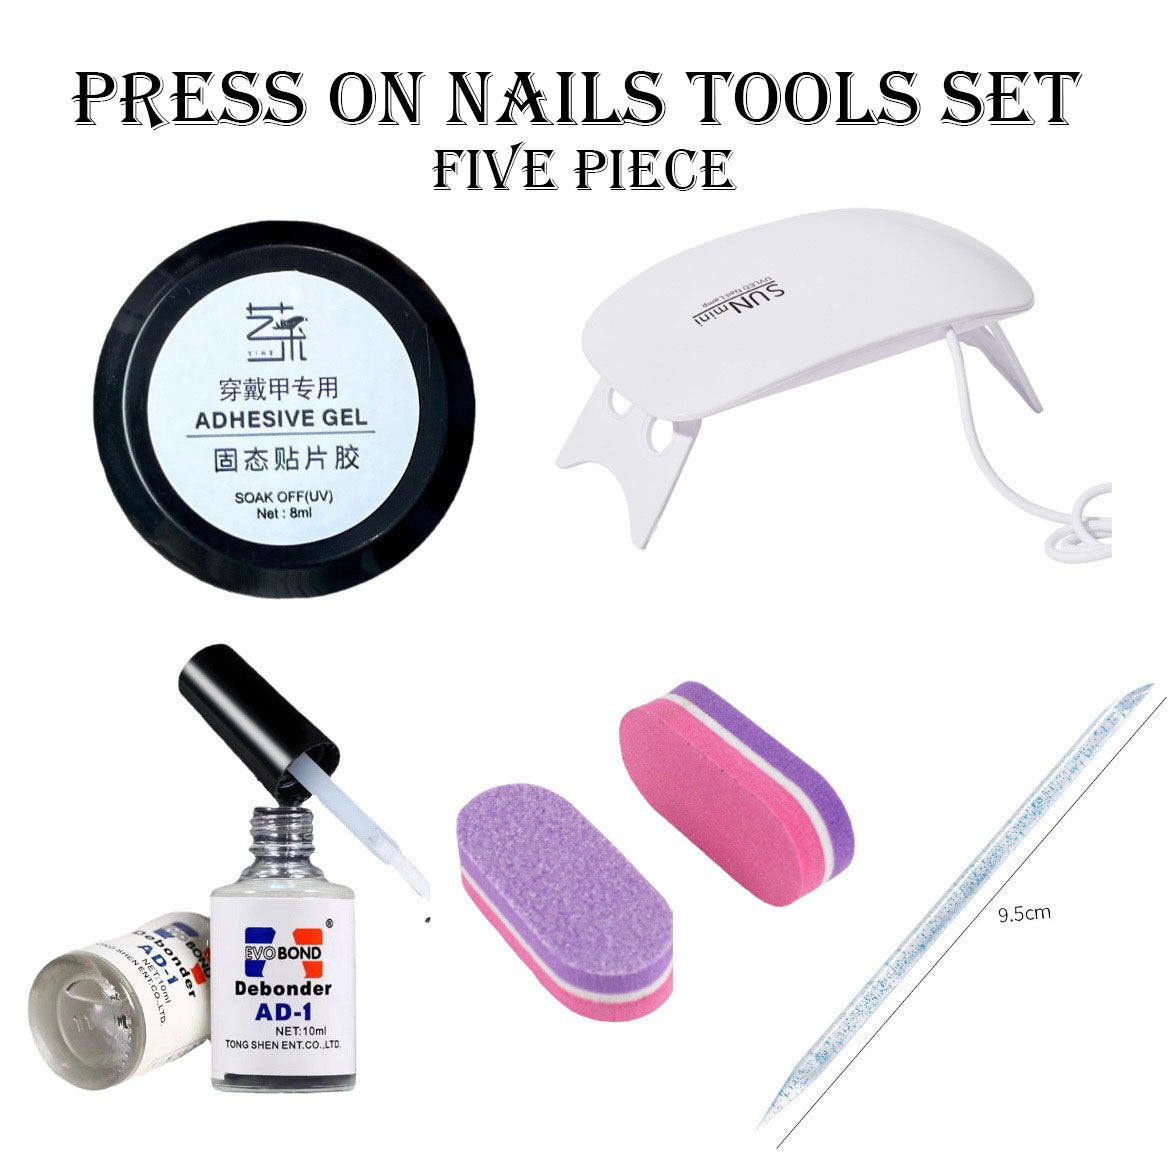 Press On Nails Tools